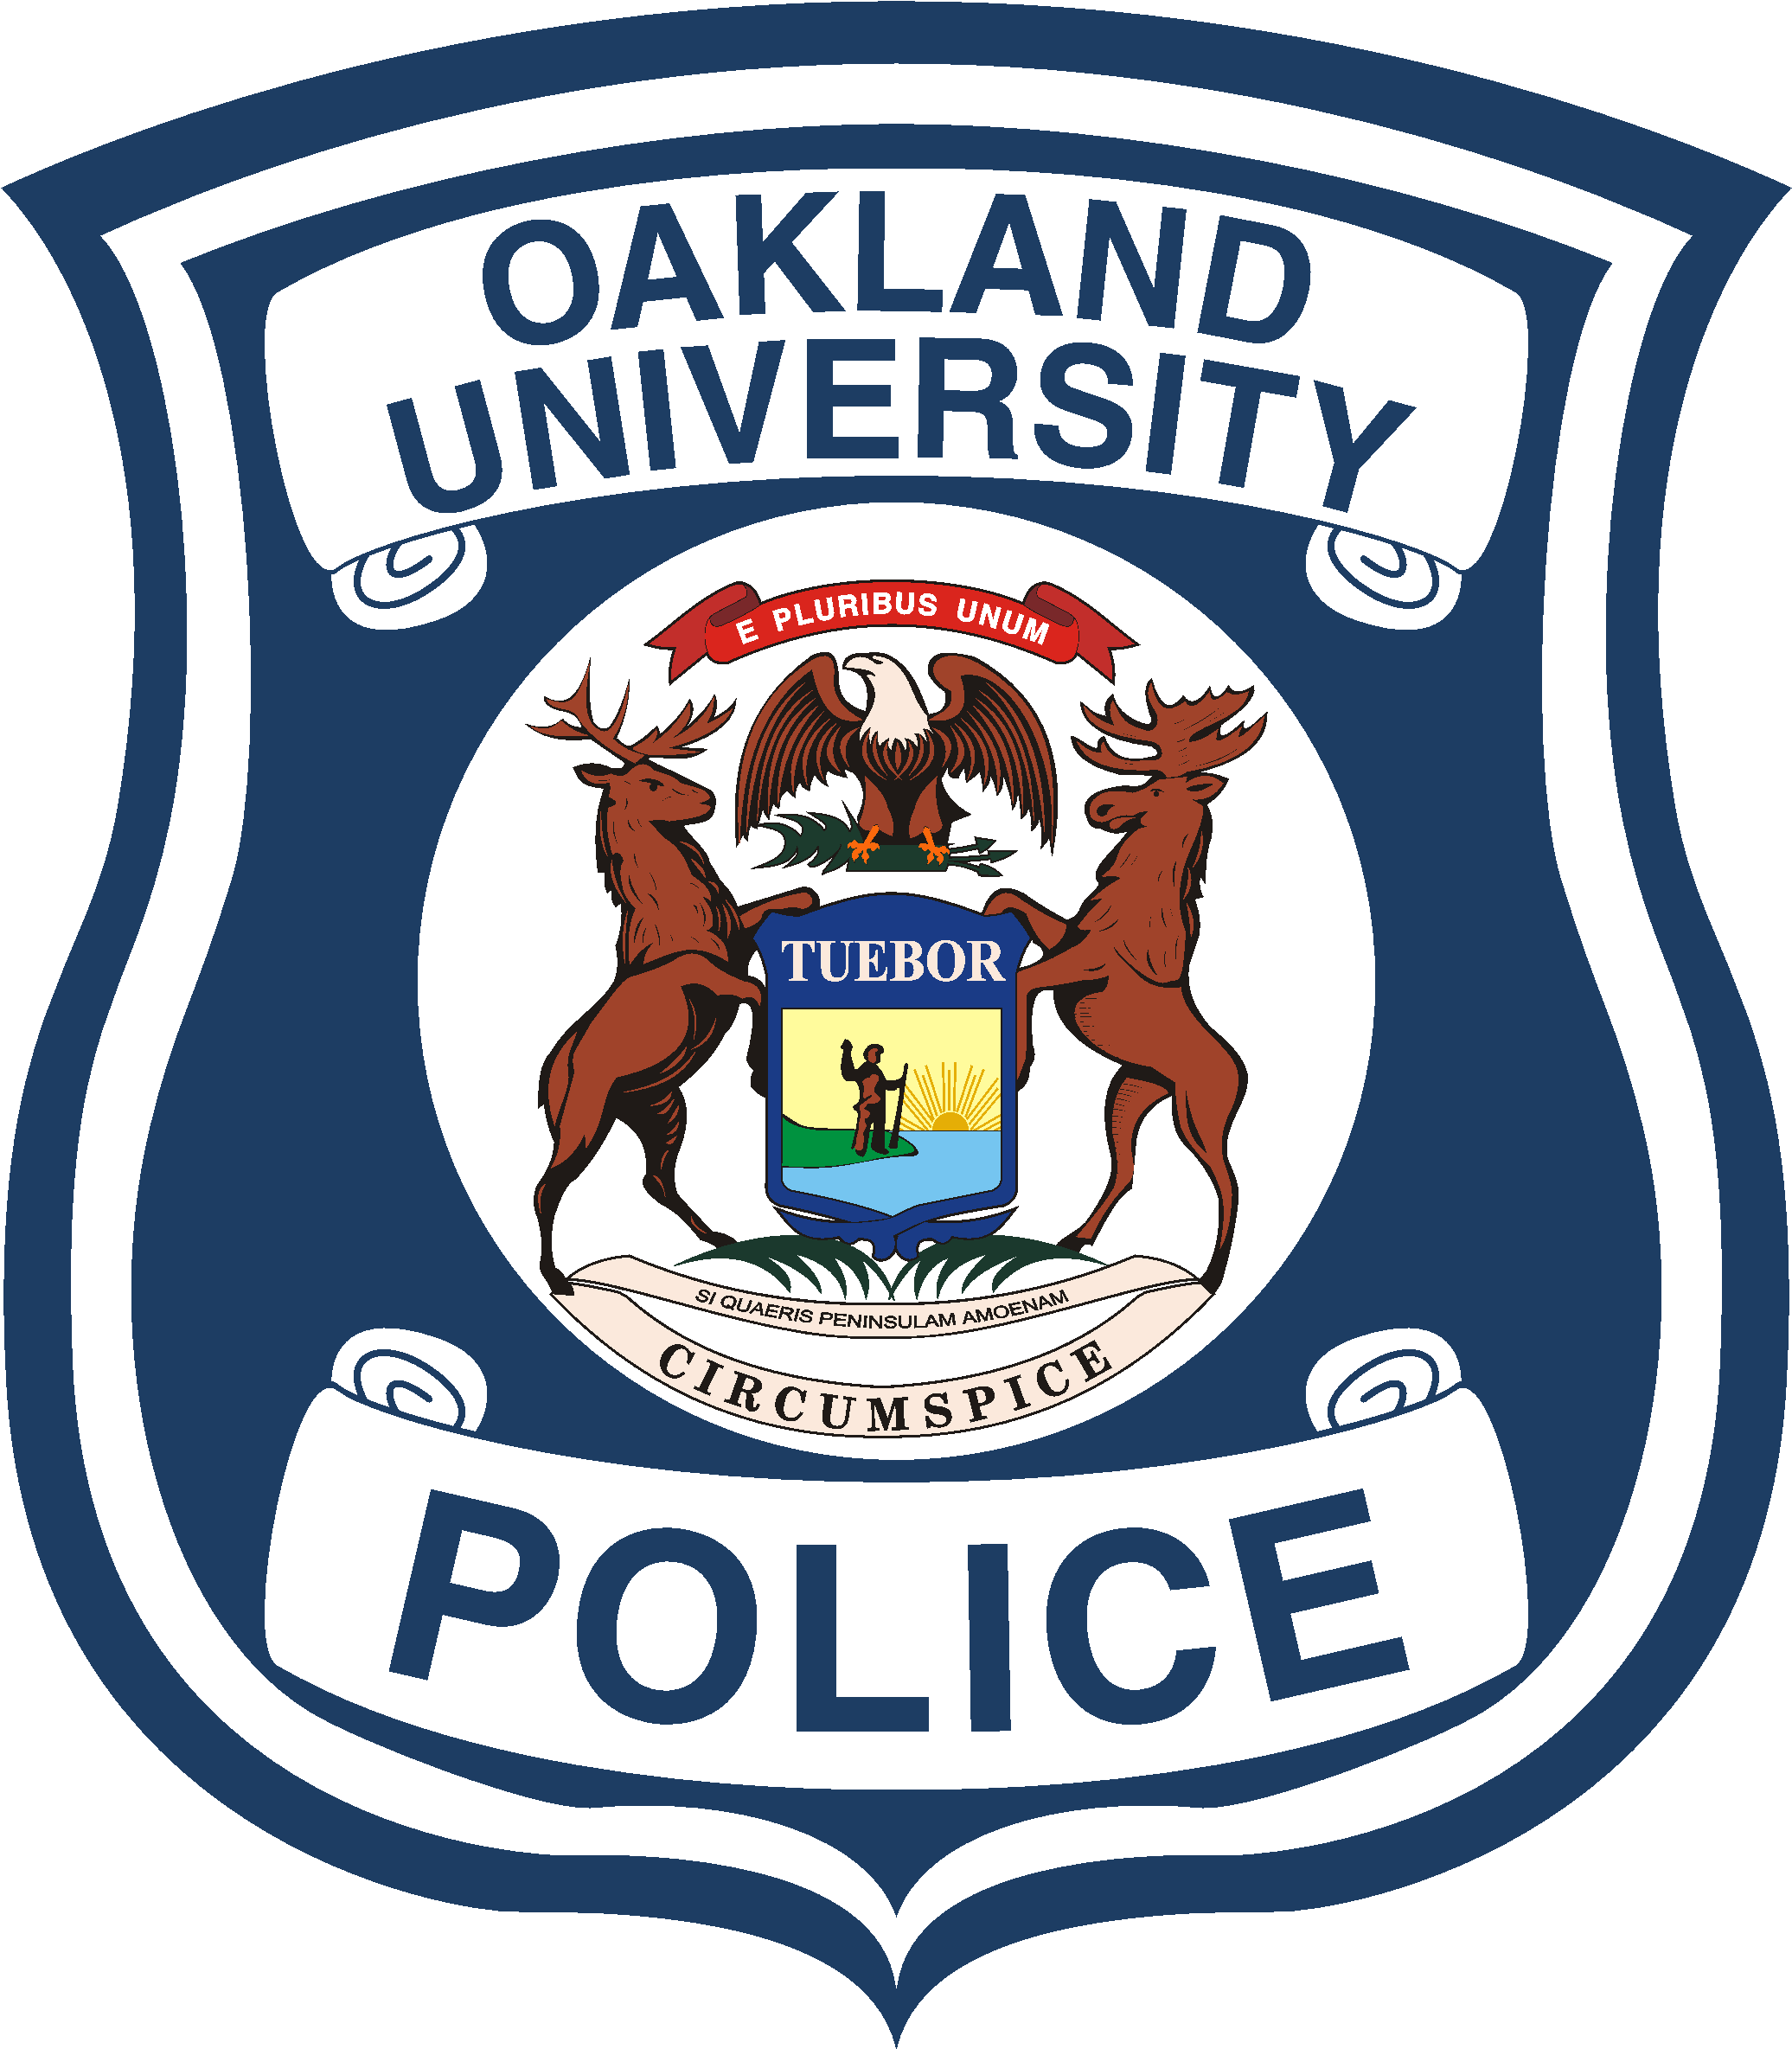 Oakland University Police Department - Oakland University Police (2119x2430)